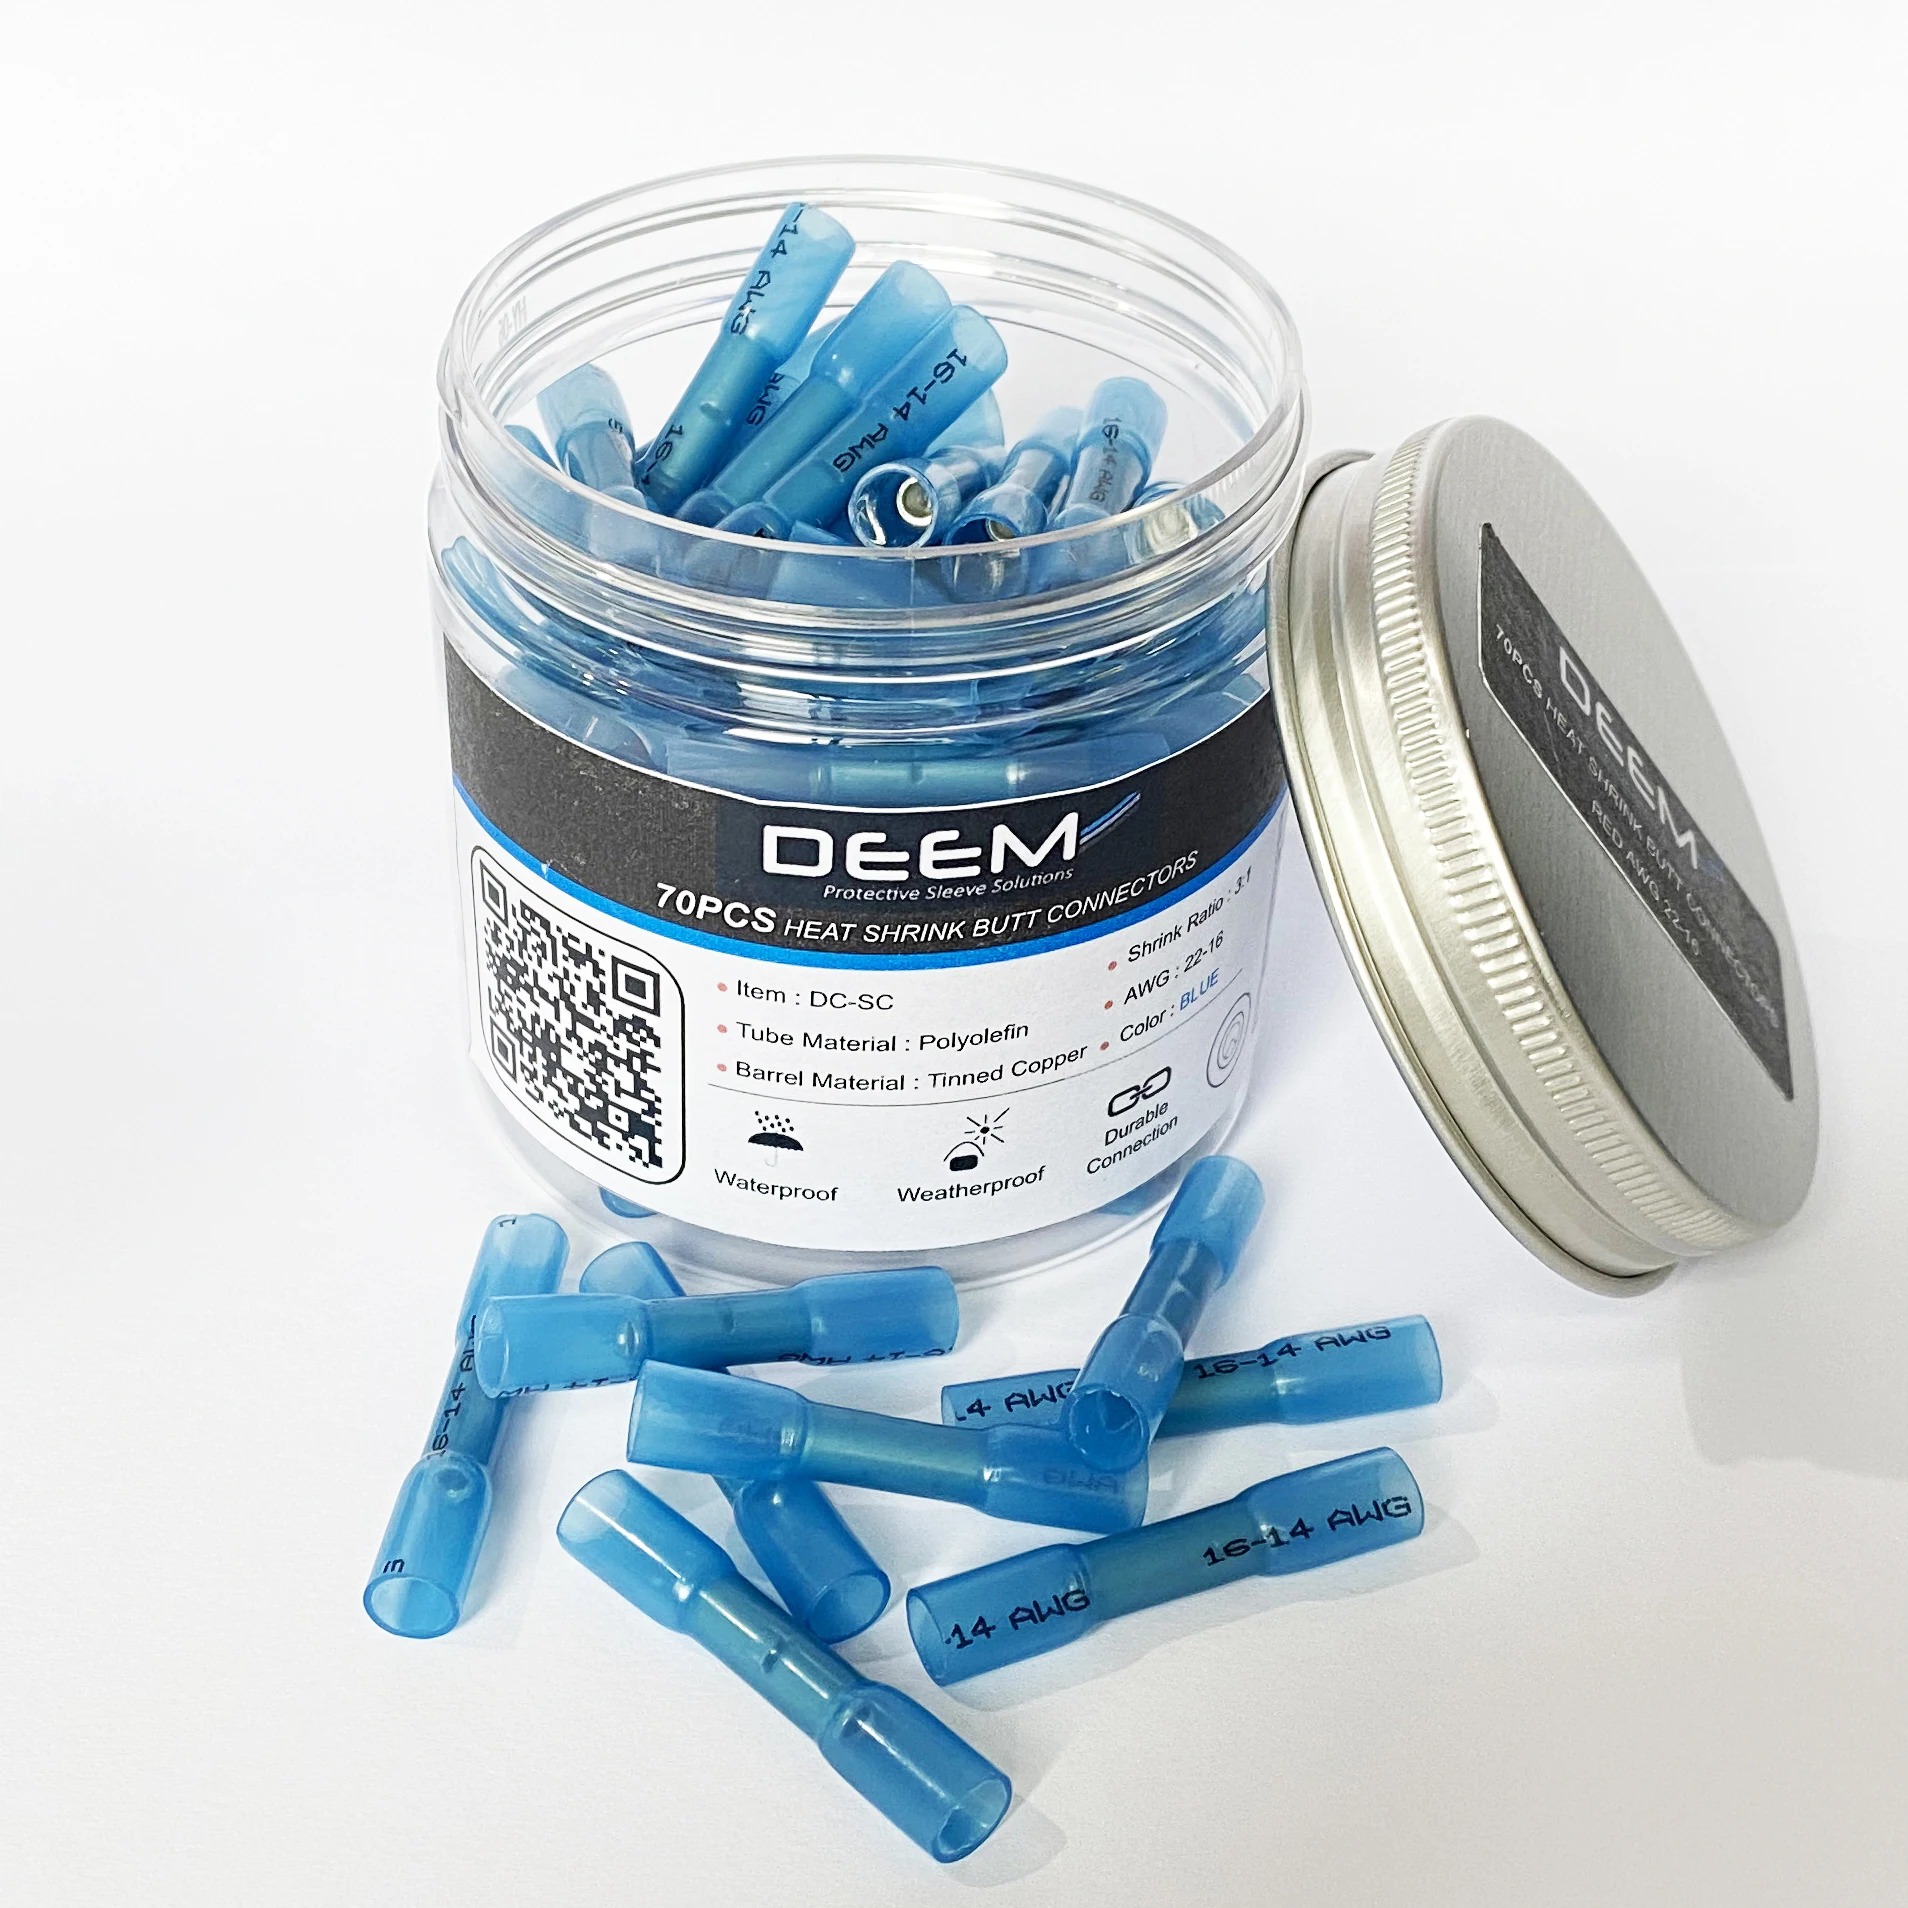 

DEEM 70PCS Heat shrink blue connectors kit Marine waterproof electrical wire connector